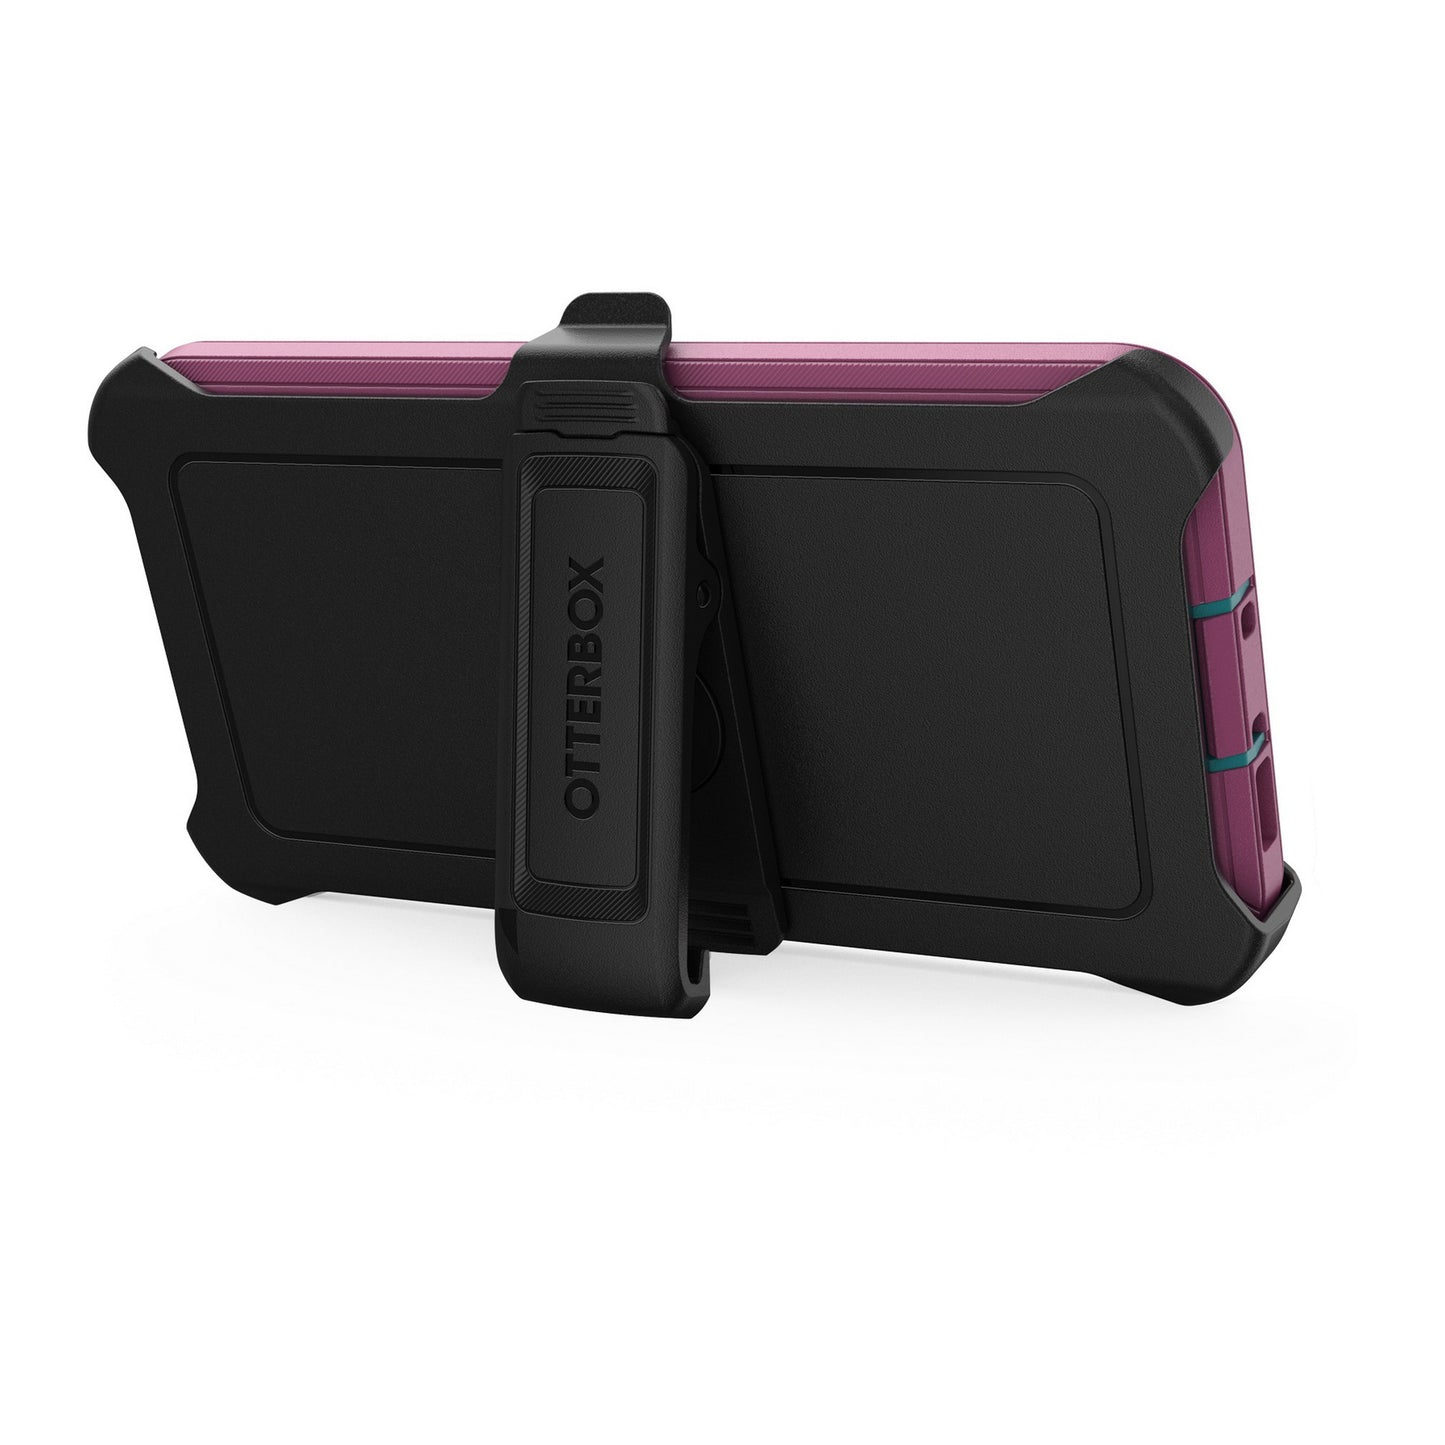 Samsung Galaxy S23+ 5G Otterbox Defender Series Case - Pink (Canyon Sun) - 15-10800